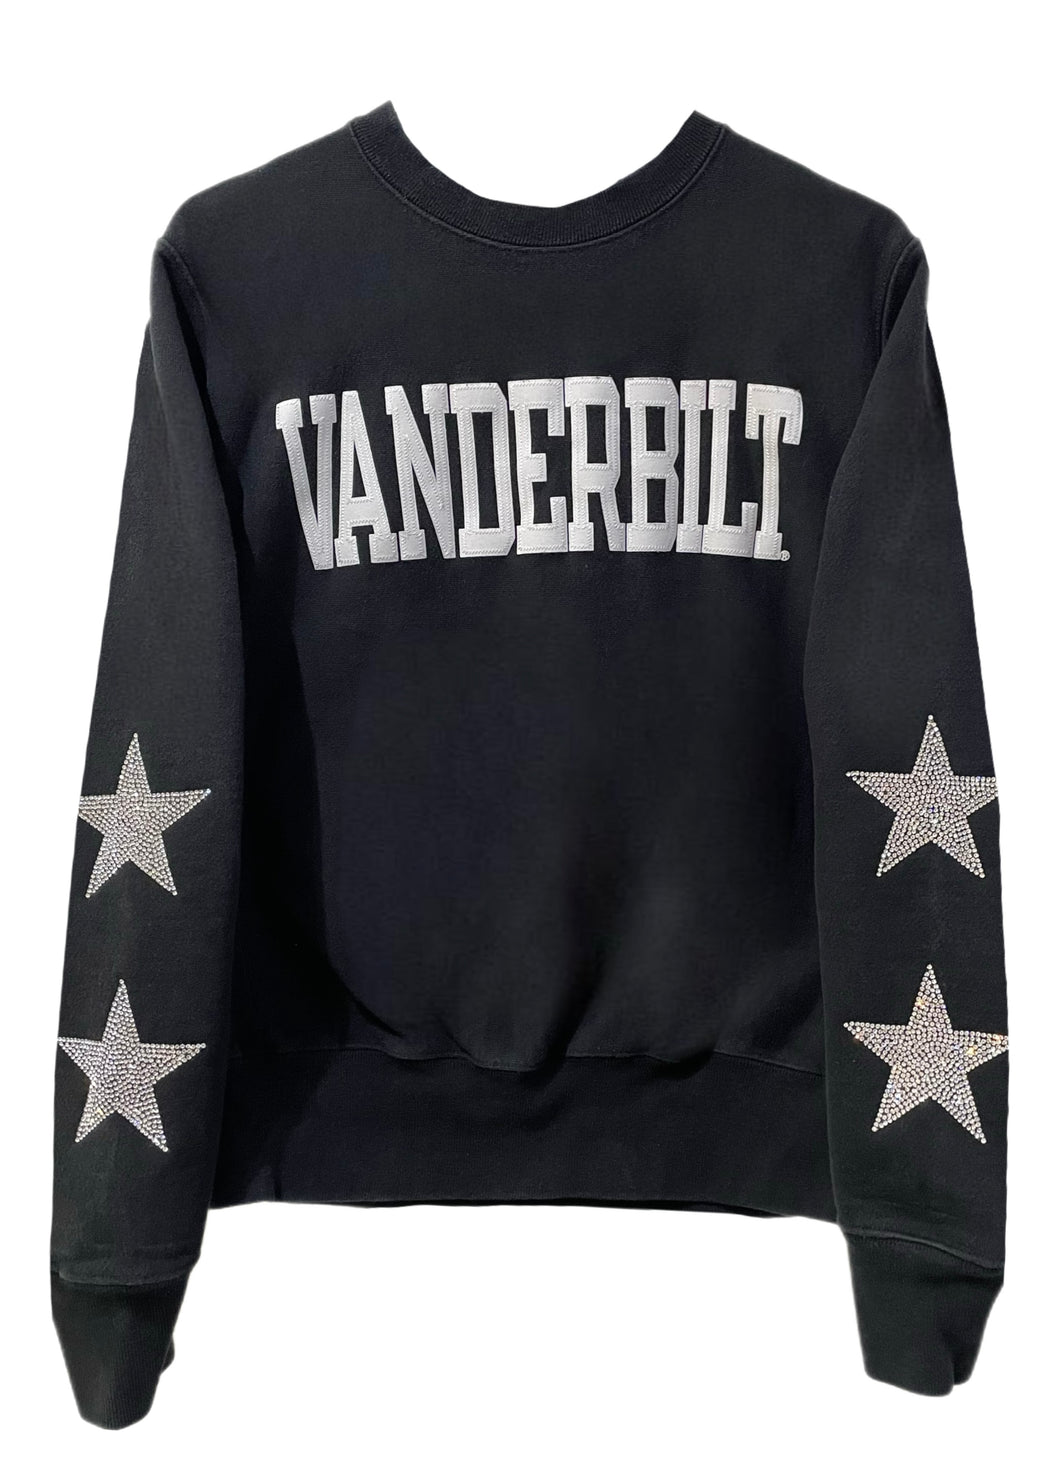 Vanderbilt University, One of a KIND Vintage Sweatshirt with Crystal Star design